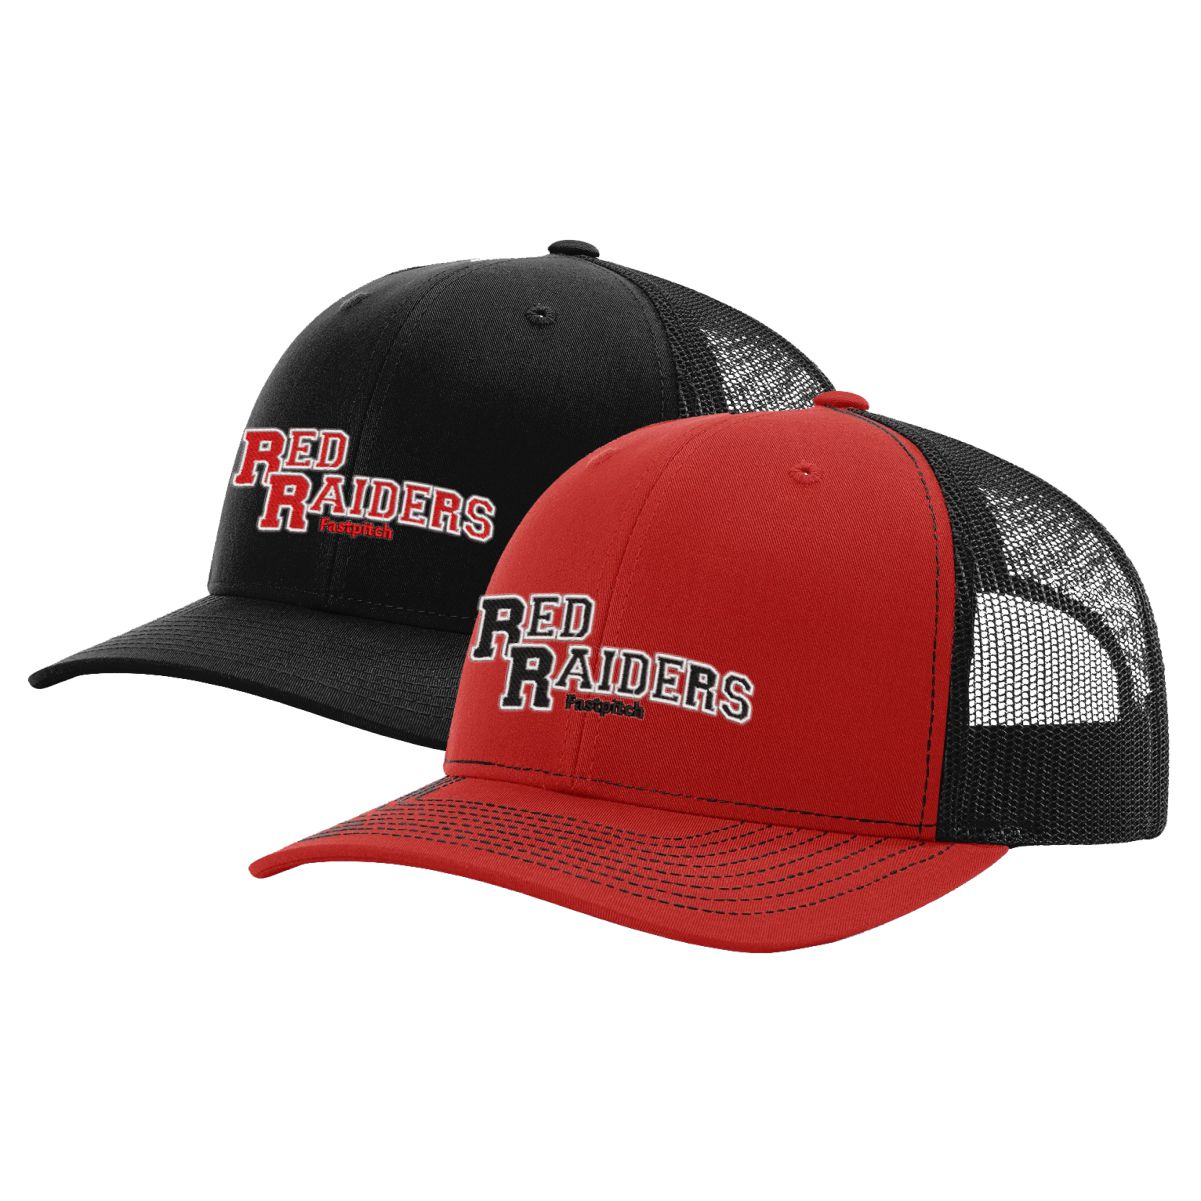 Red Raiders Fastpitch Softball Trucker Cap | HyperStitch, Inc